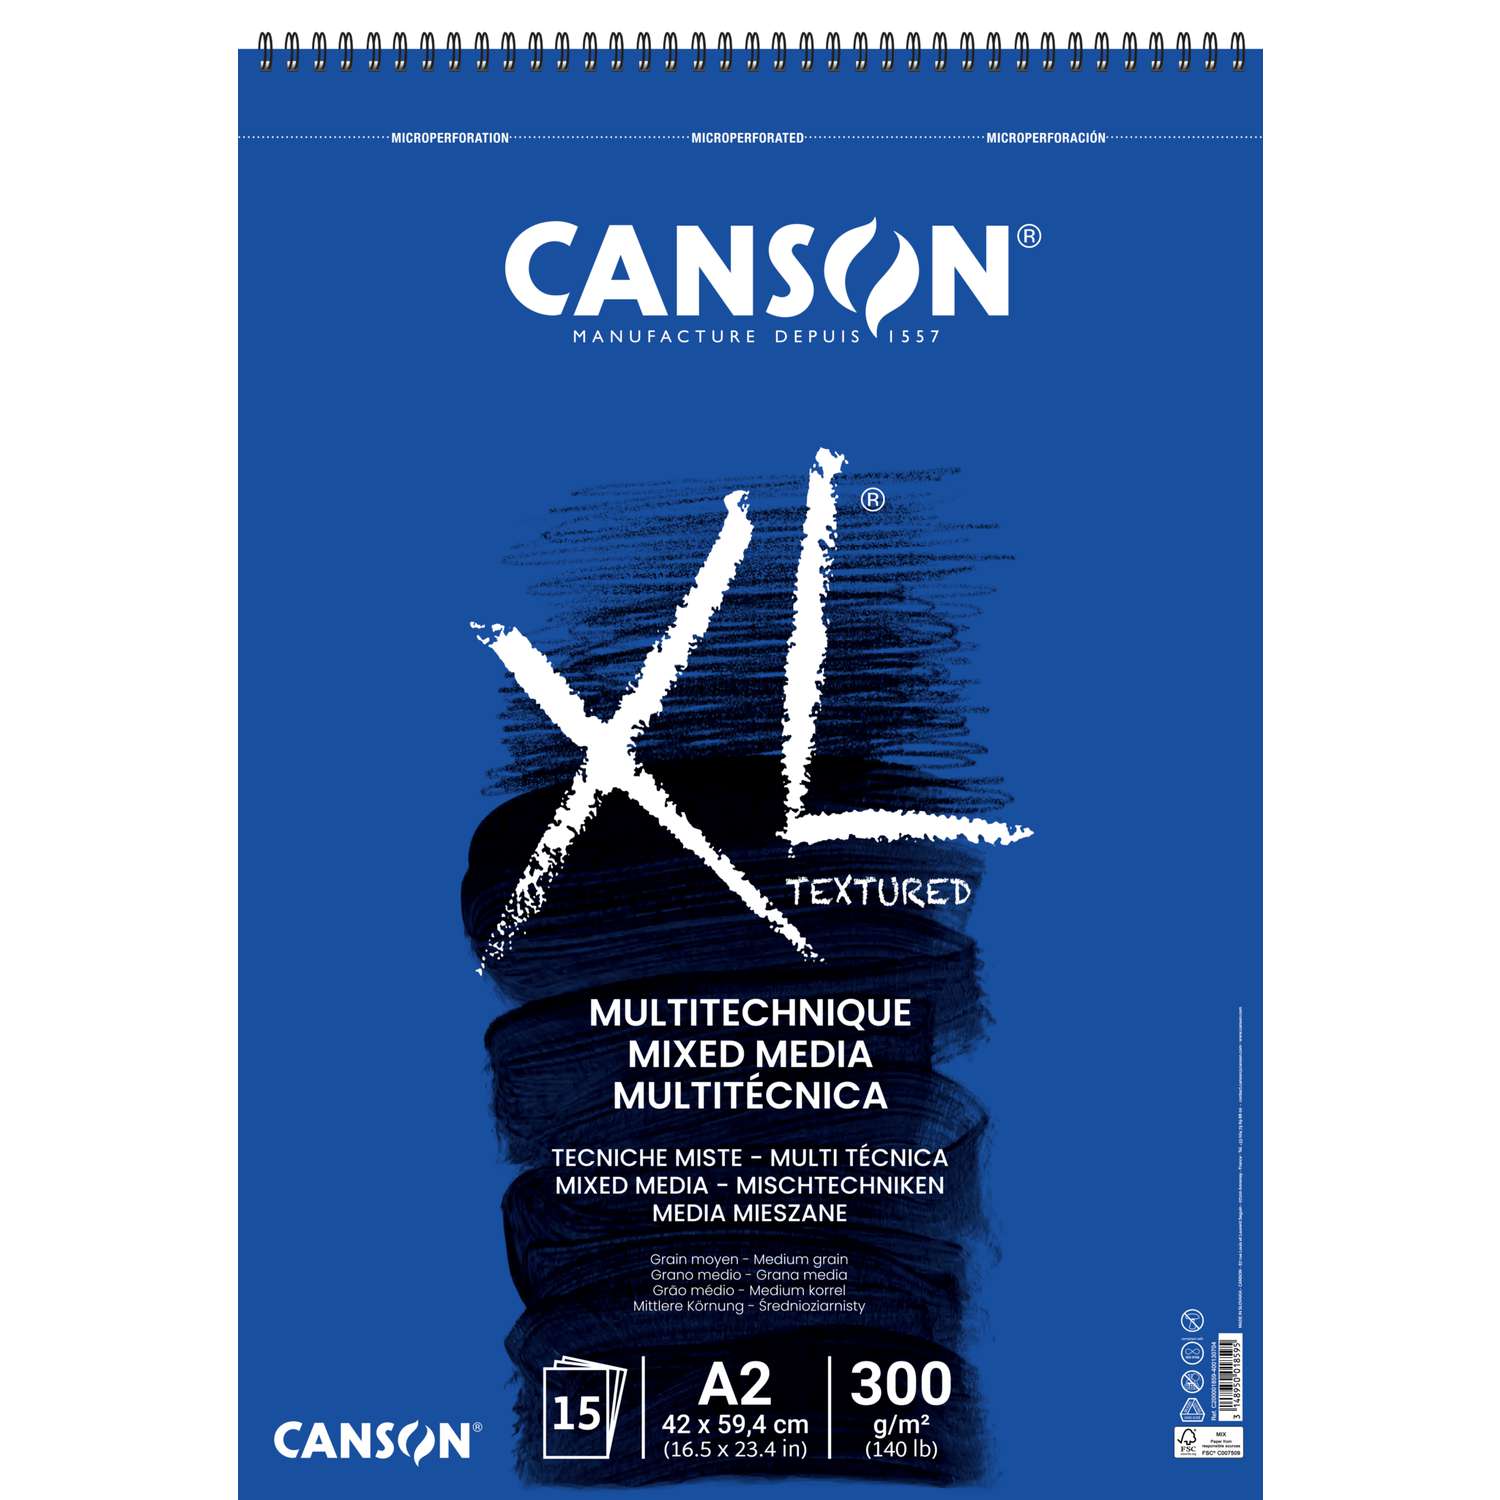 Canson XL Oil & Acrylic Pad 11 x 14